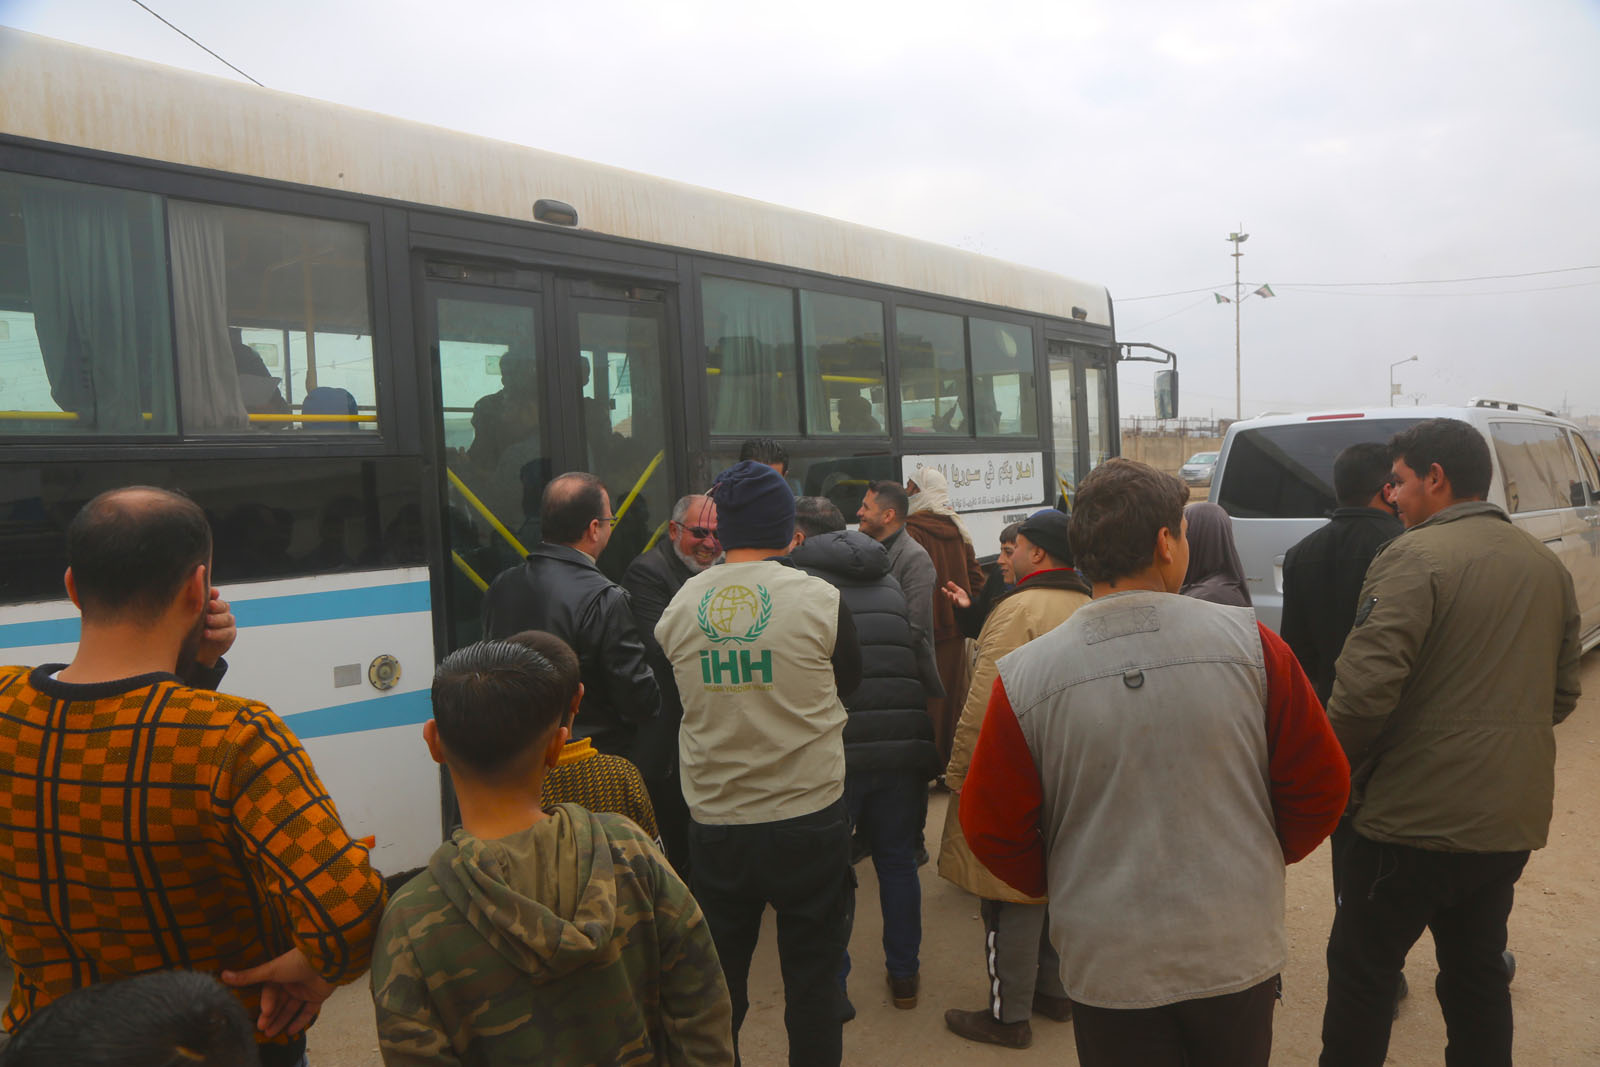 23 More Iraqis Returned Home